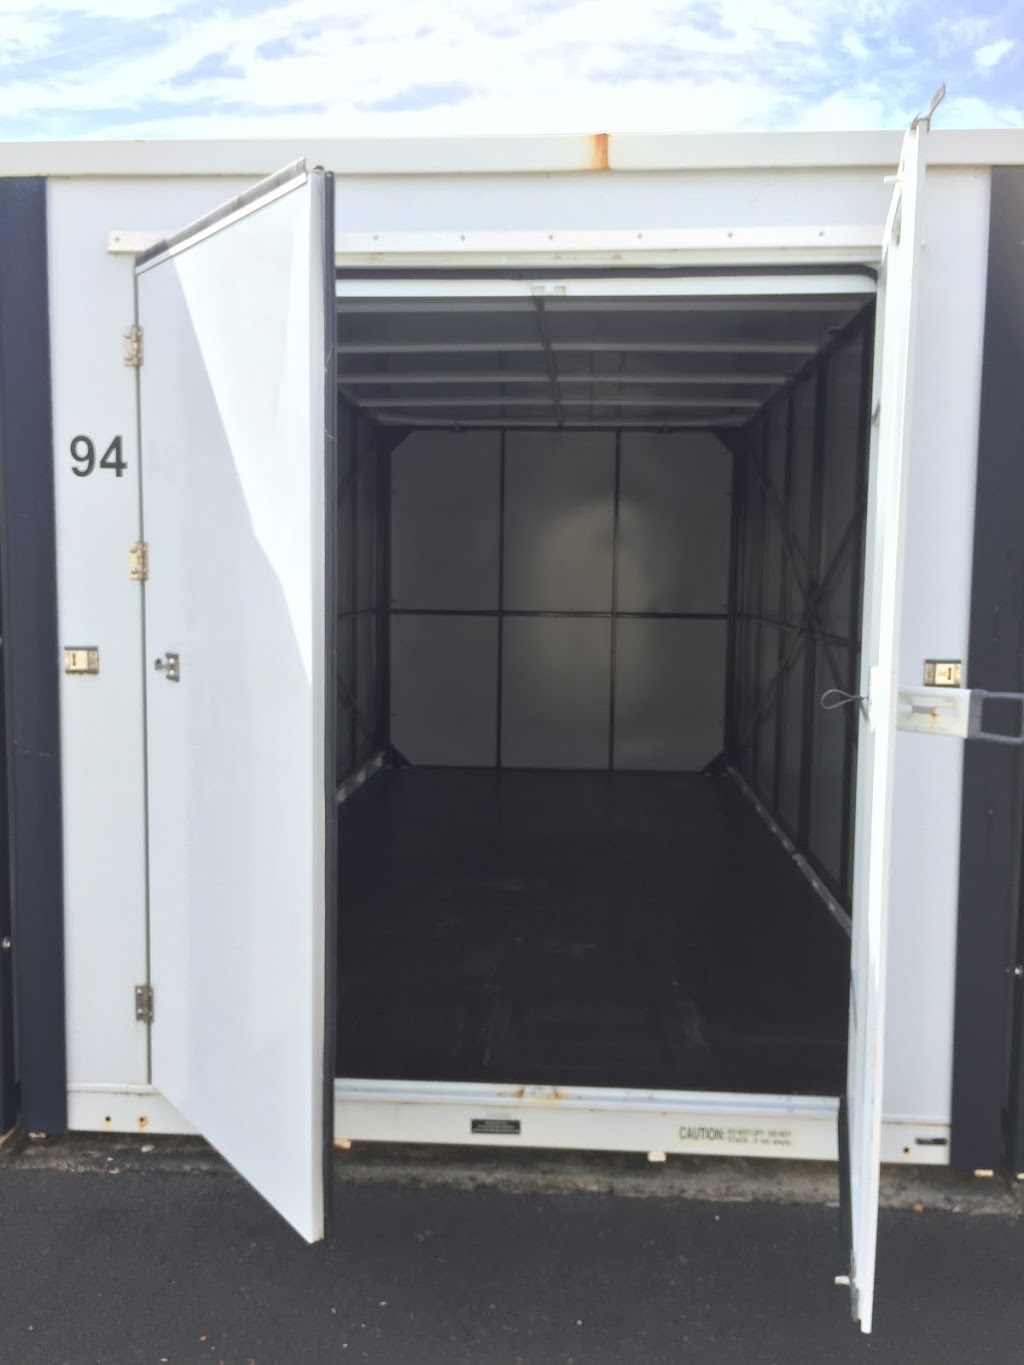 Cowaramup Self Storage | storage | 25 Friesian St, Cowaramup WA 6284, Australia | 0421504584 OR +61 421 504 584